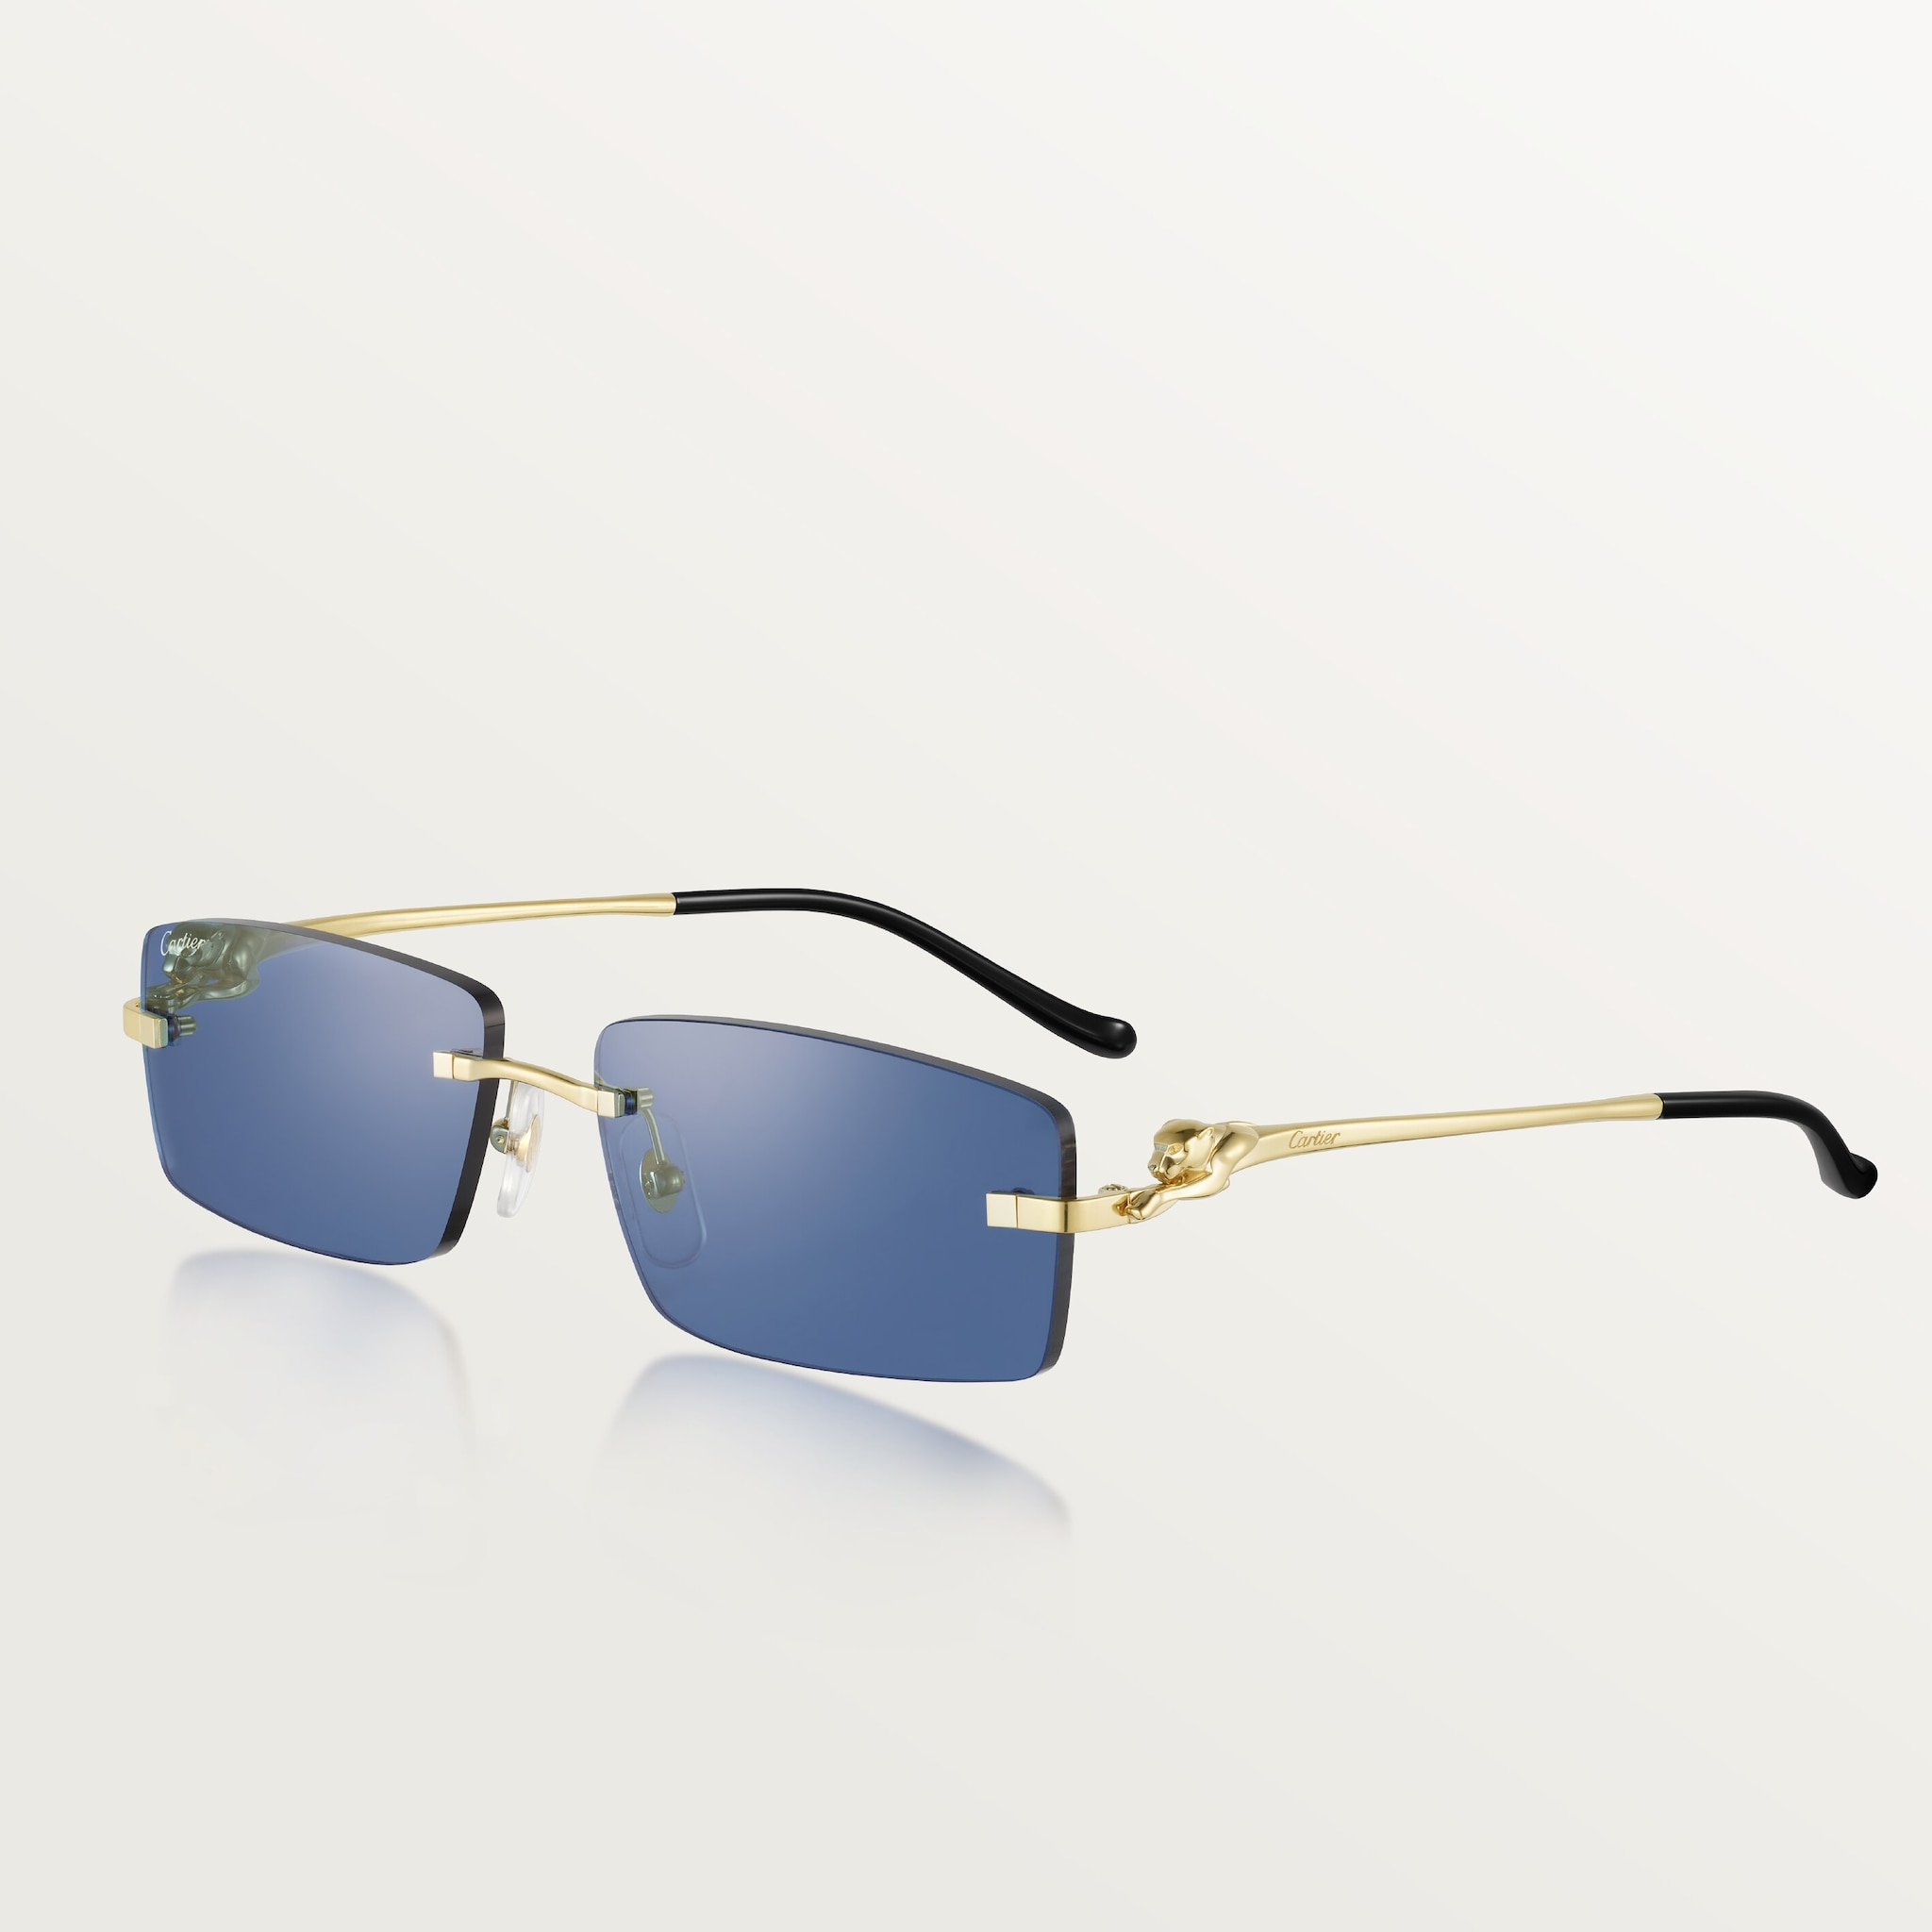 CRESW00663 - Panthère de Cartier sunglasses - Smooth golden-finish 